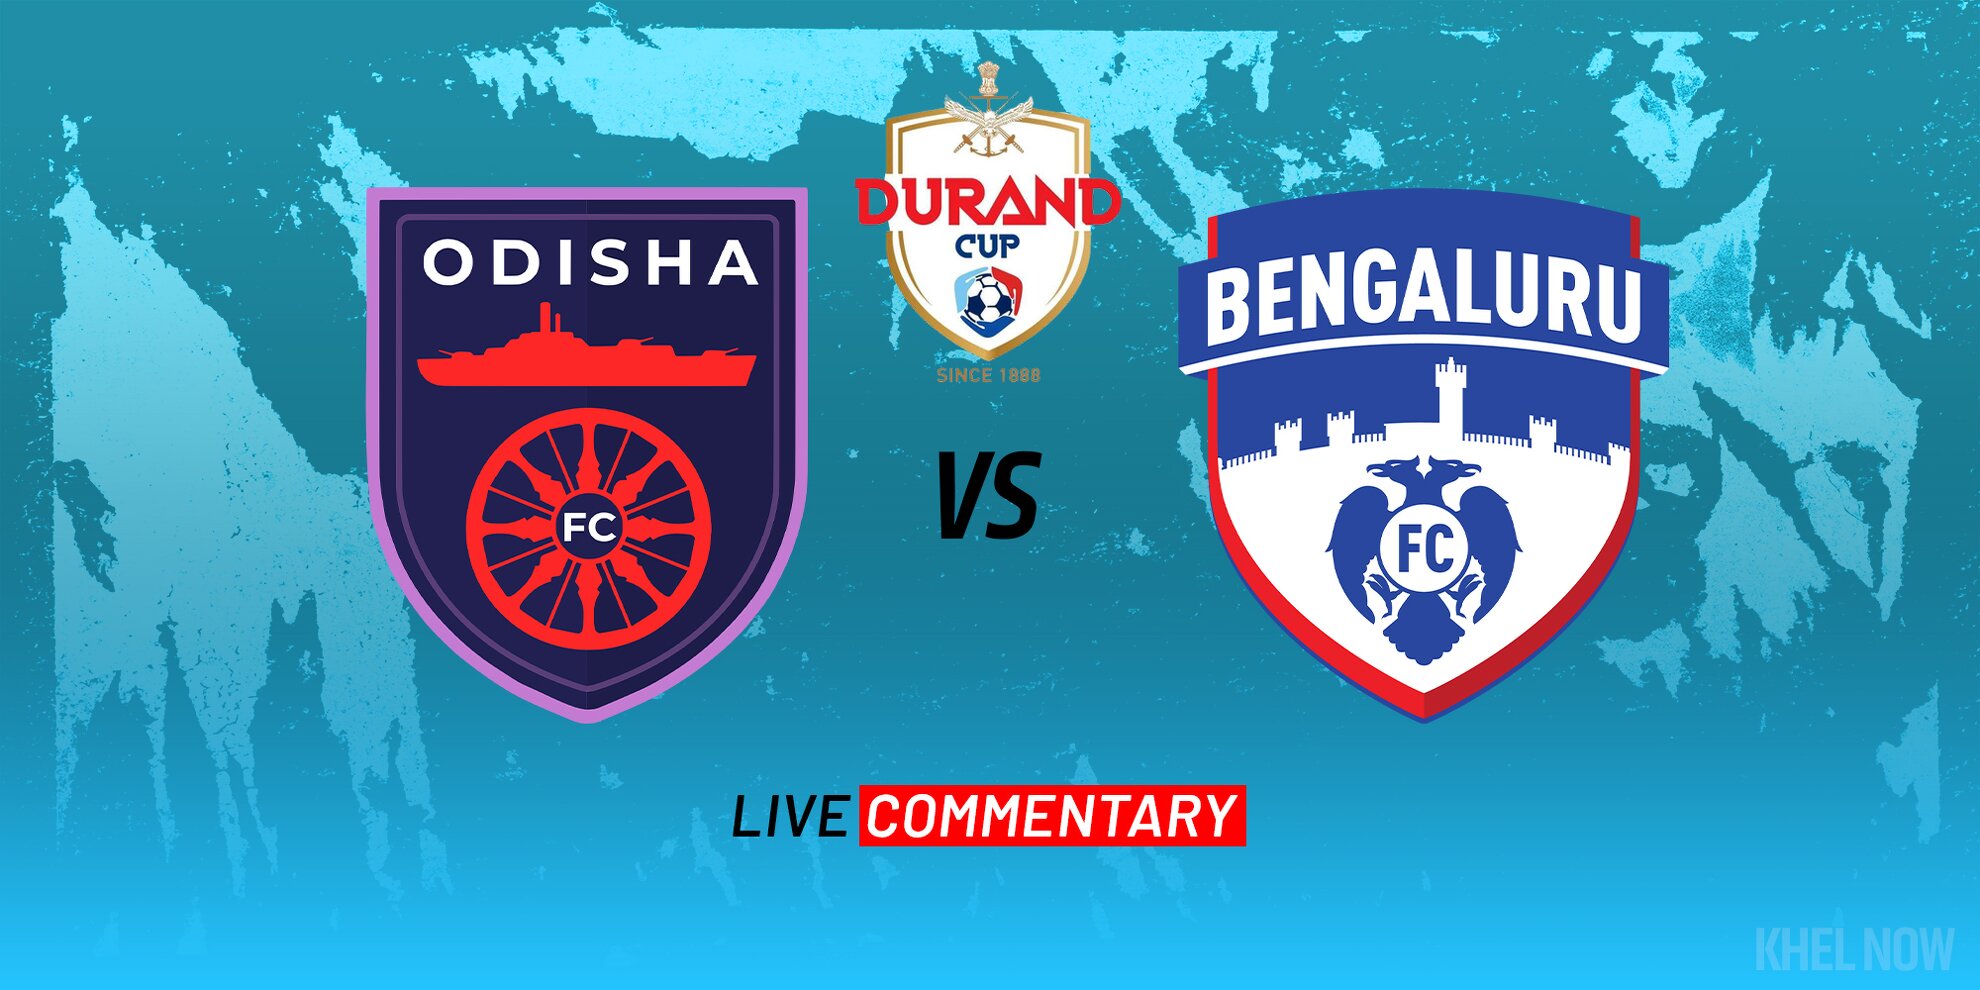 Odisha FC vs Bengaluru FC Live Commentary